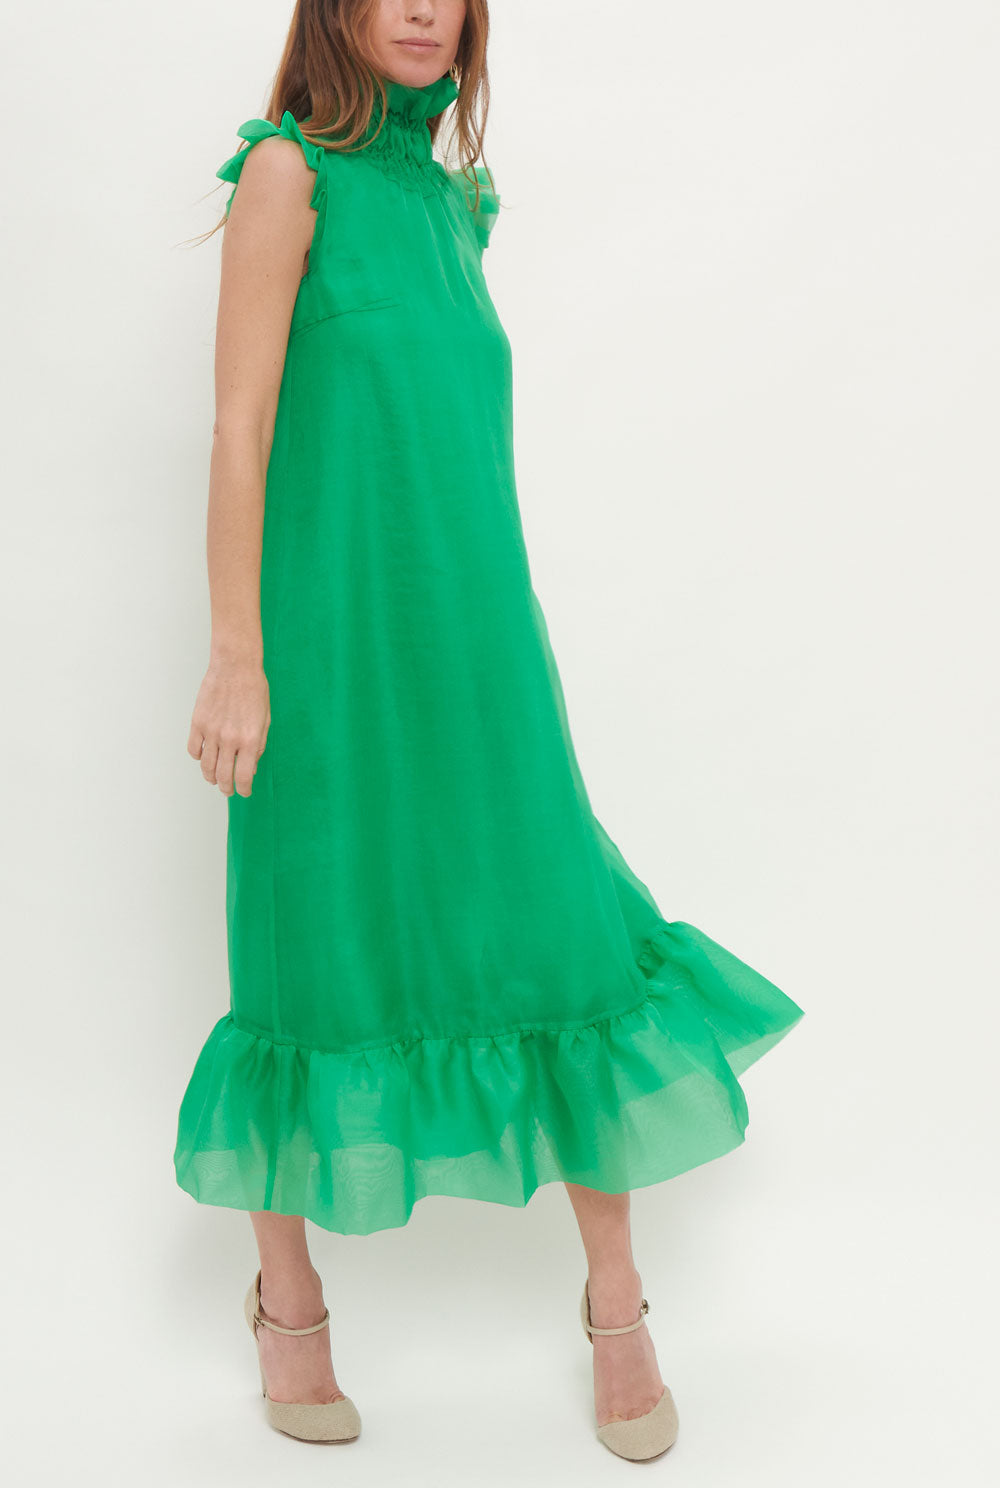 Andrea organza green midi dress Dresses Diddo Madrid 